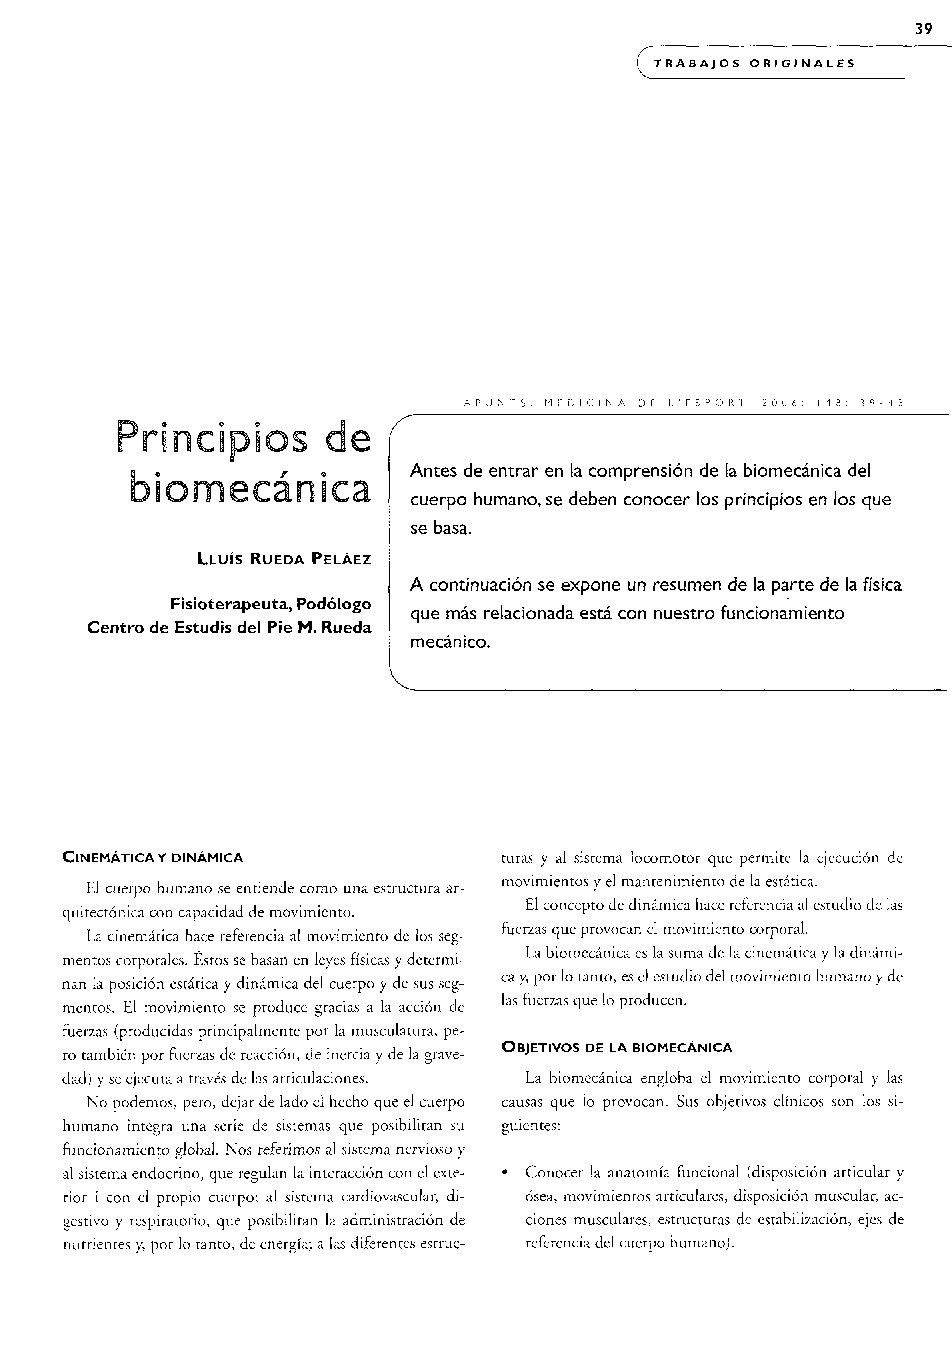 Principios de biomecónica